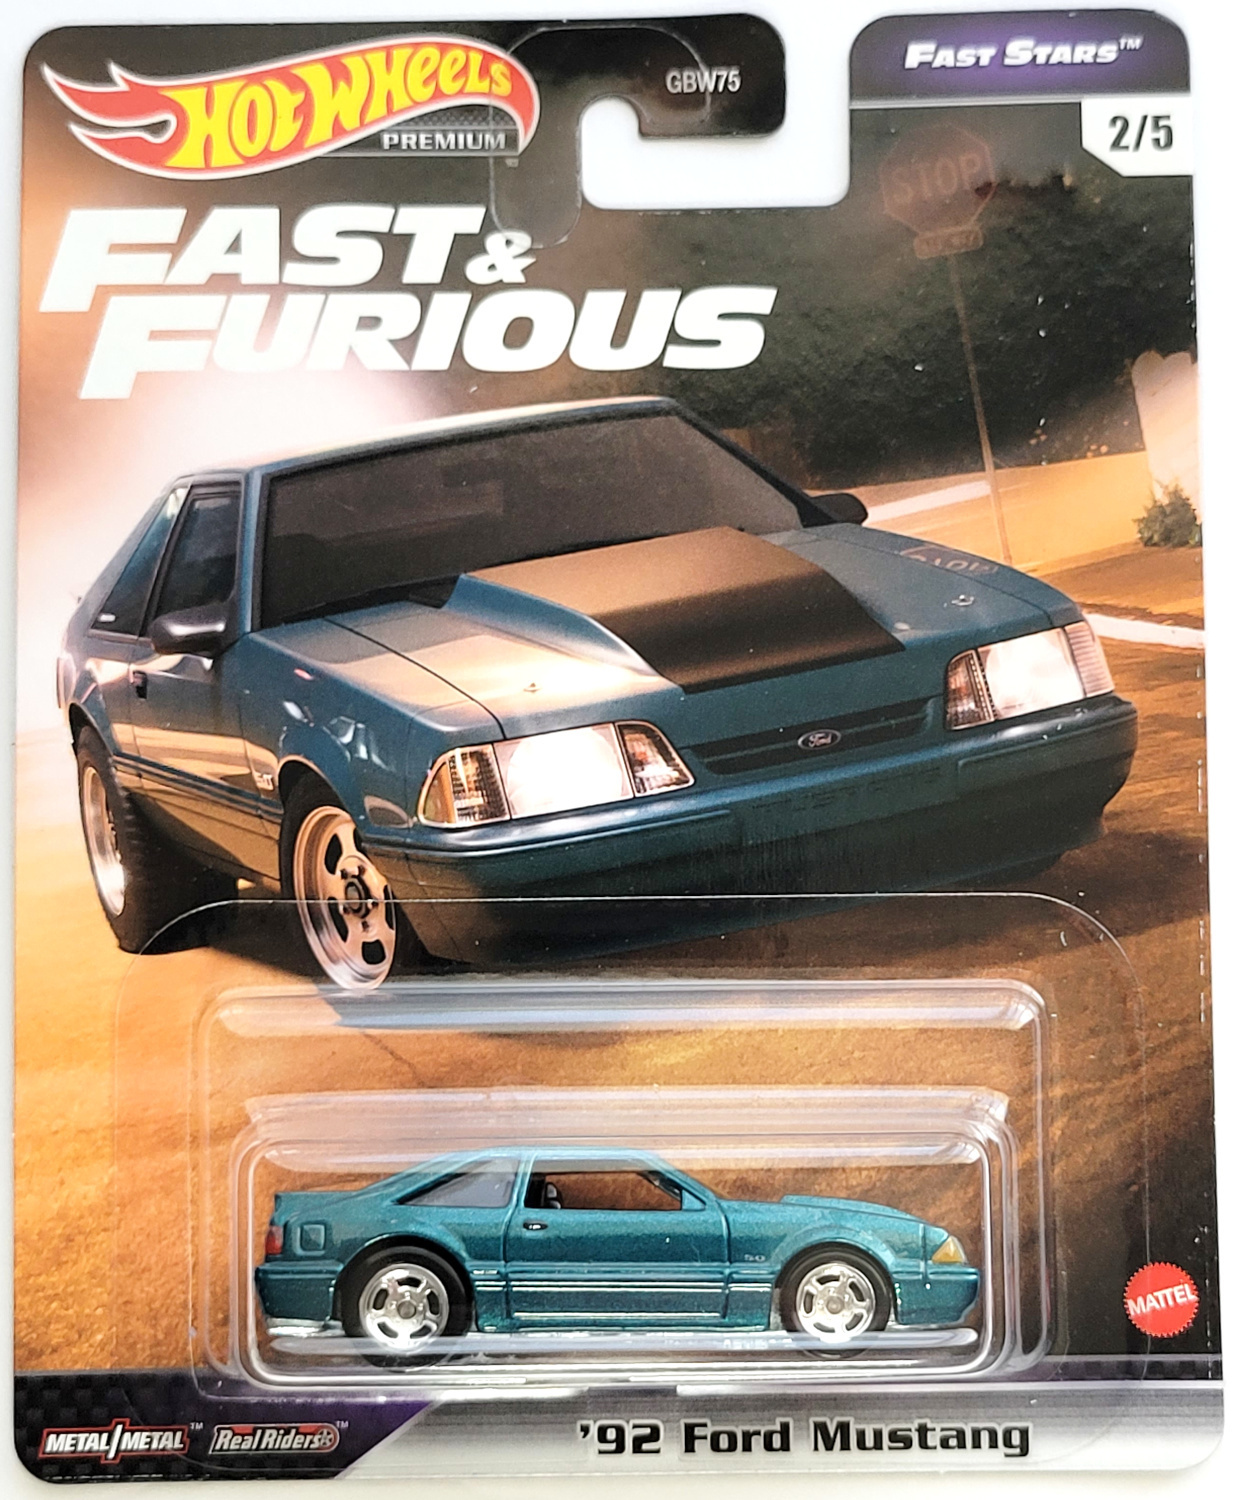 1992 Ford Mustang Fast Stars Hot Wheels 2021 Fast & Furious Premium GRL72